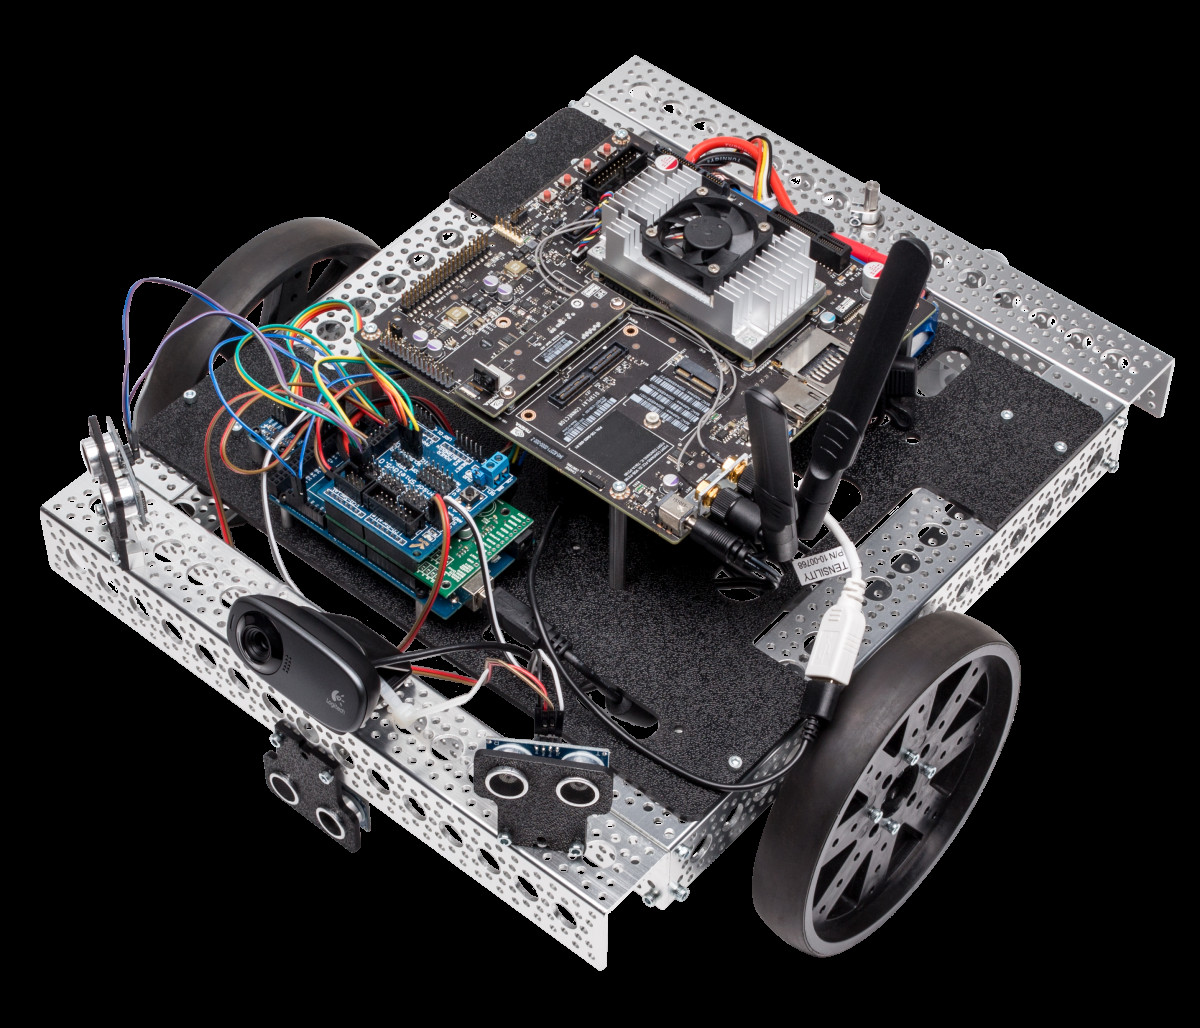 Best ideas about DIY Robotics Kit
. Save or Pin Go Hands on with Jet A DIY Robotics Kit Now.